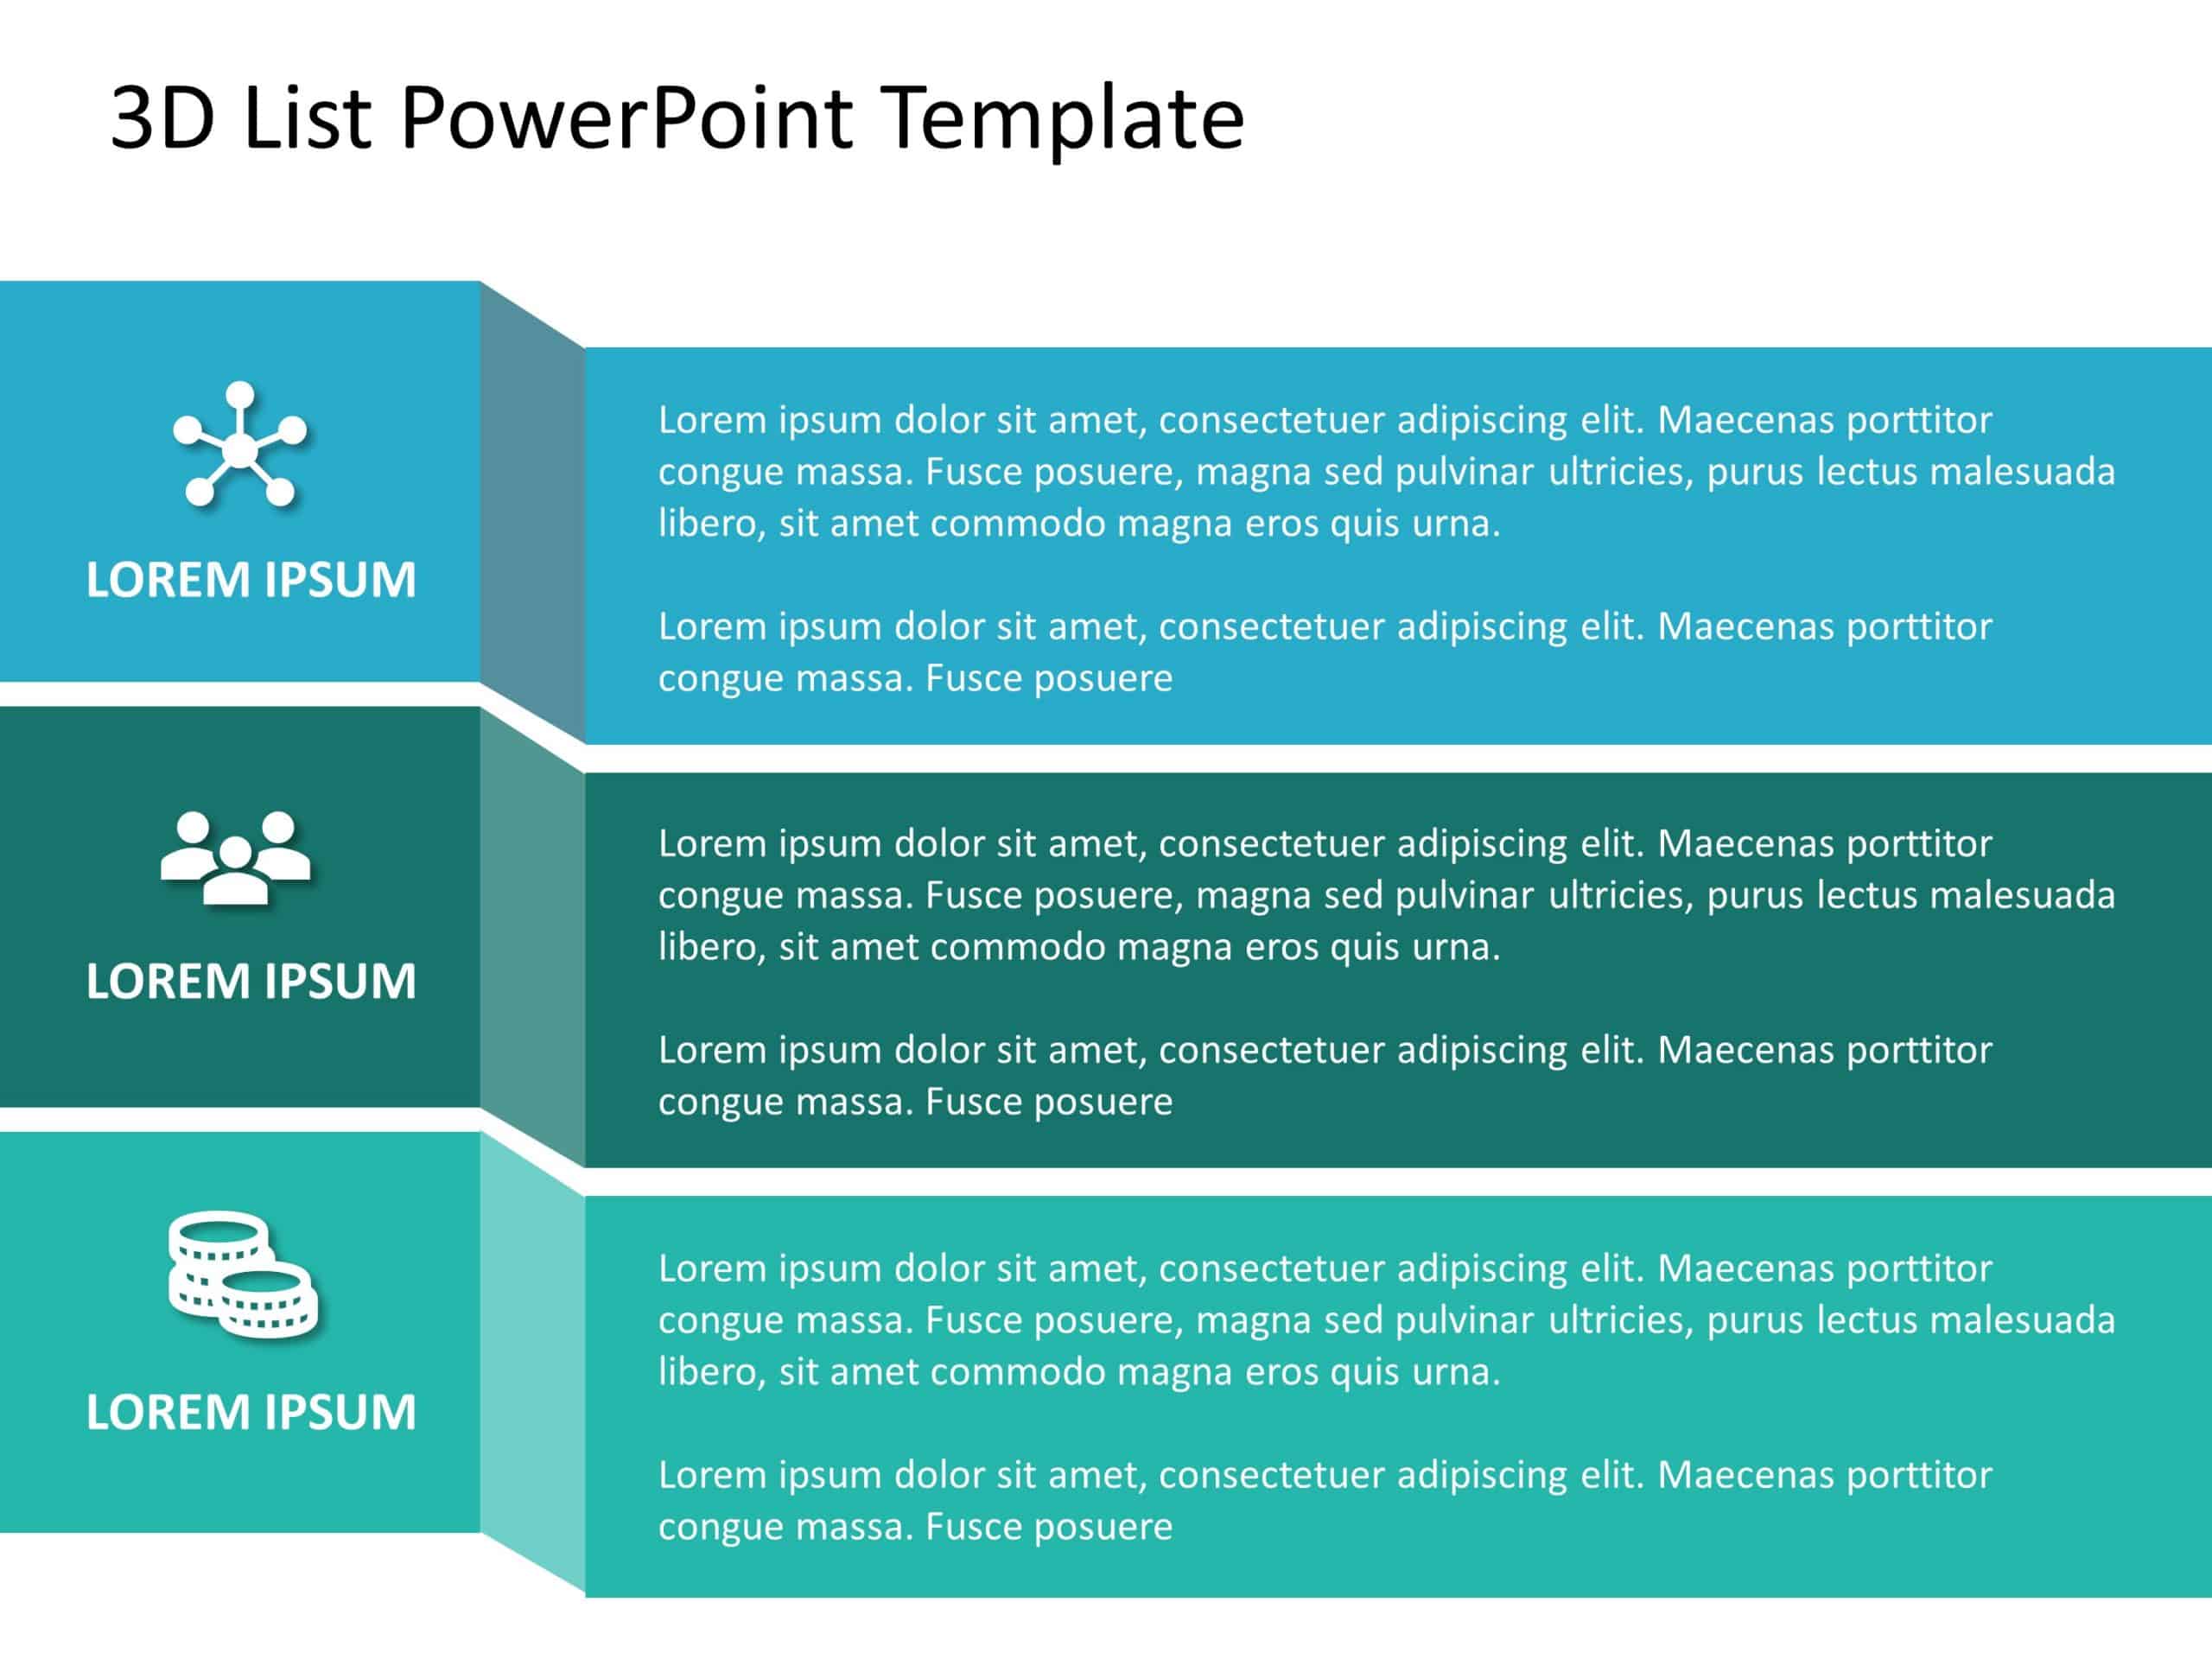 Free 3D List PowerPoint Template